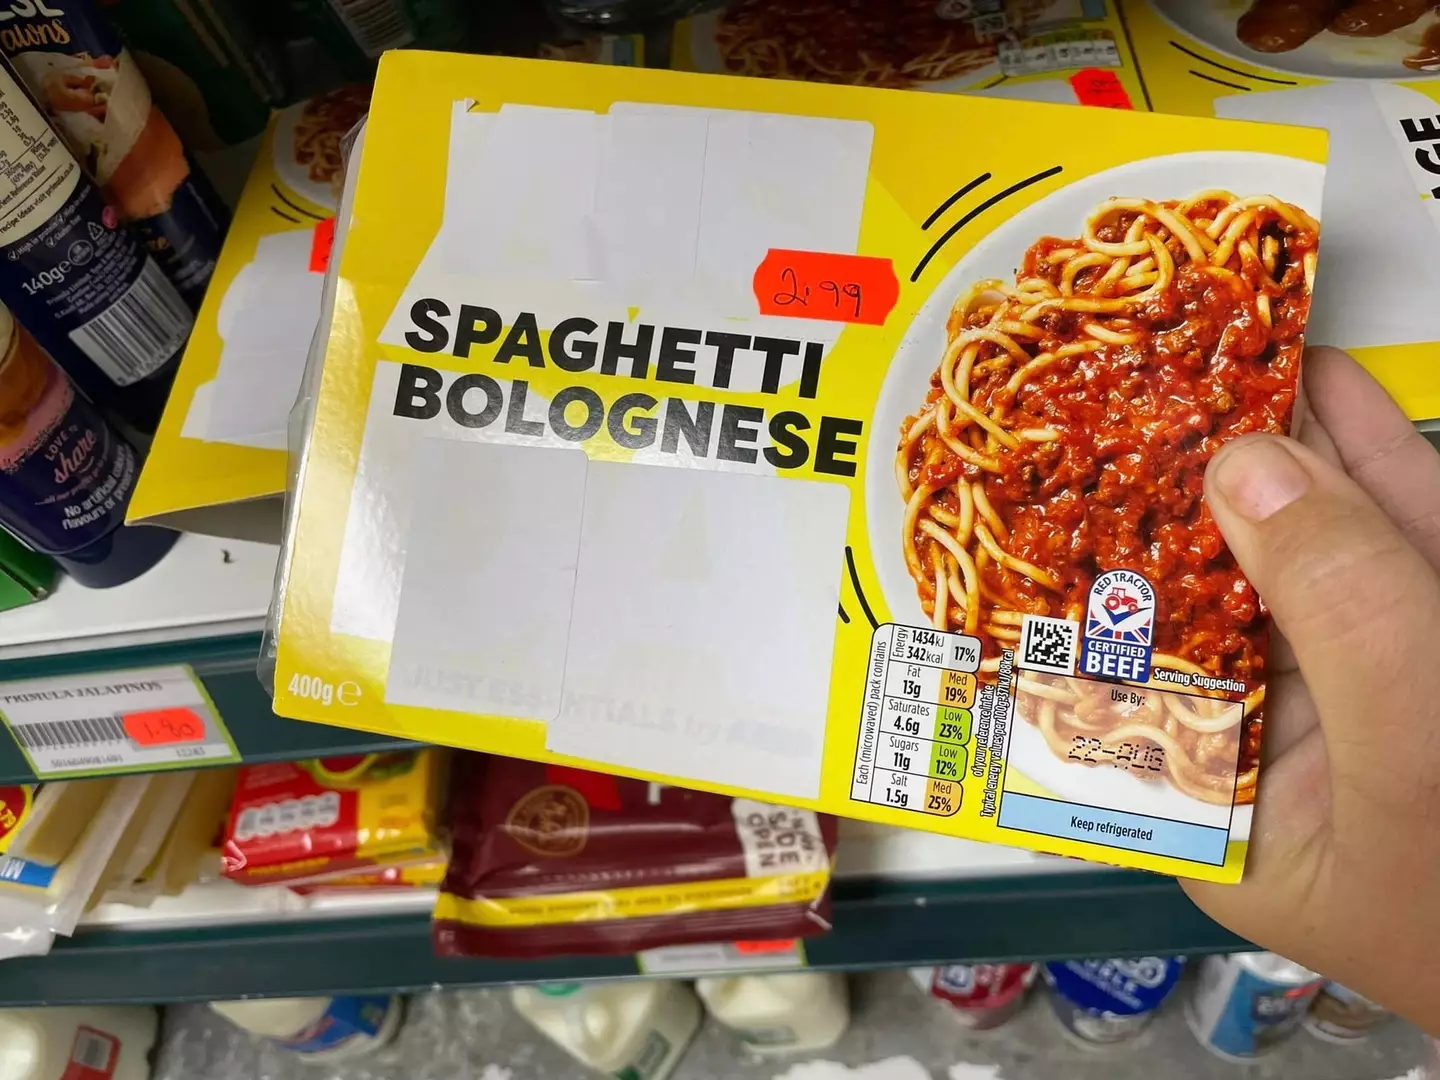 Jenny found a rebranded Just Essentials Spaghetti Bolognese.